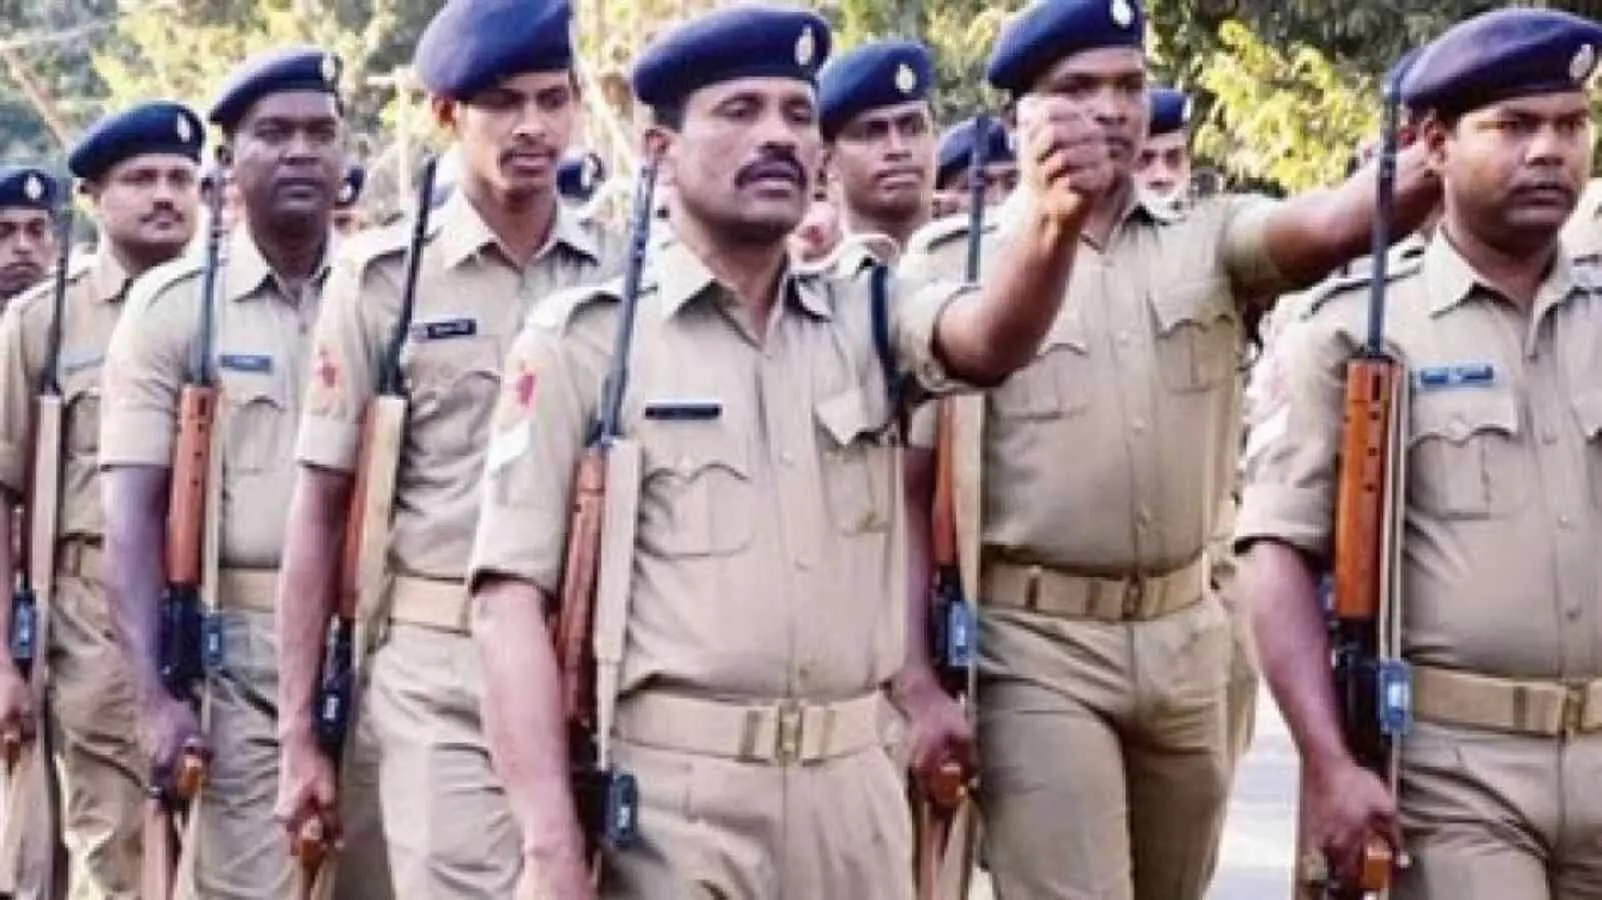 Odisha Police Constable Recruitment